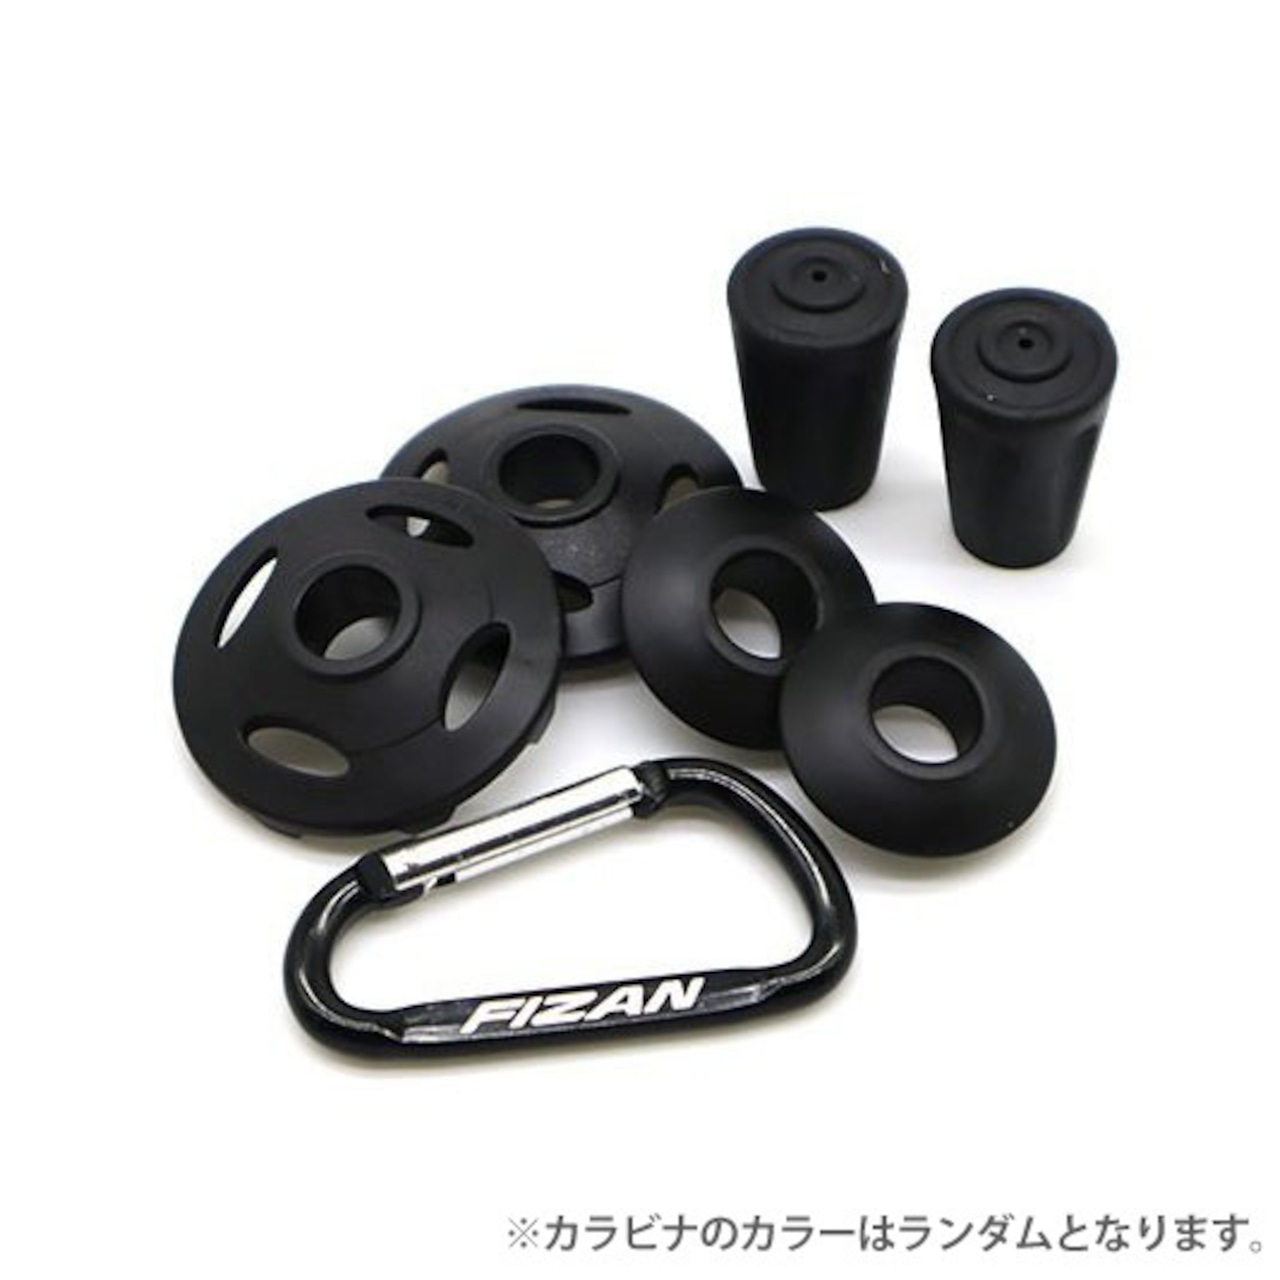 FIZAN フィザン 軽量 可変4段 トレッキングポール51-125cm TR COMPACT4 Black/COLK コンパクト4 ブラック